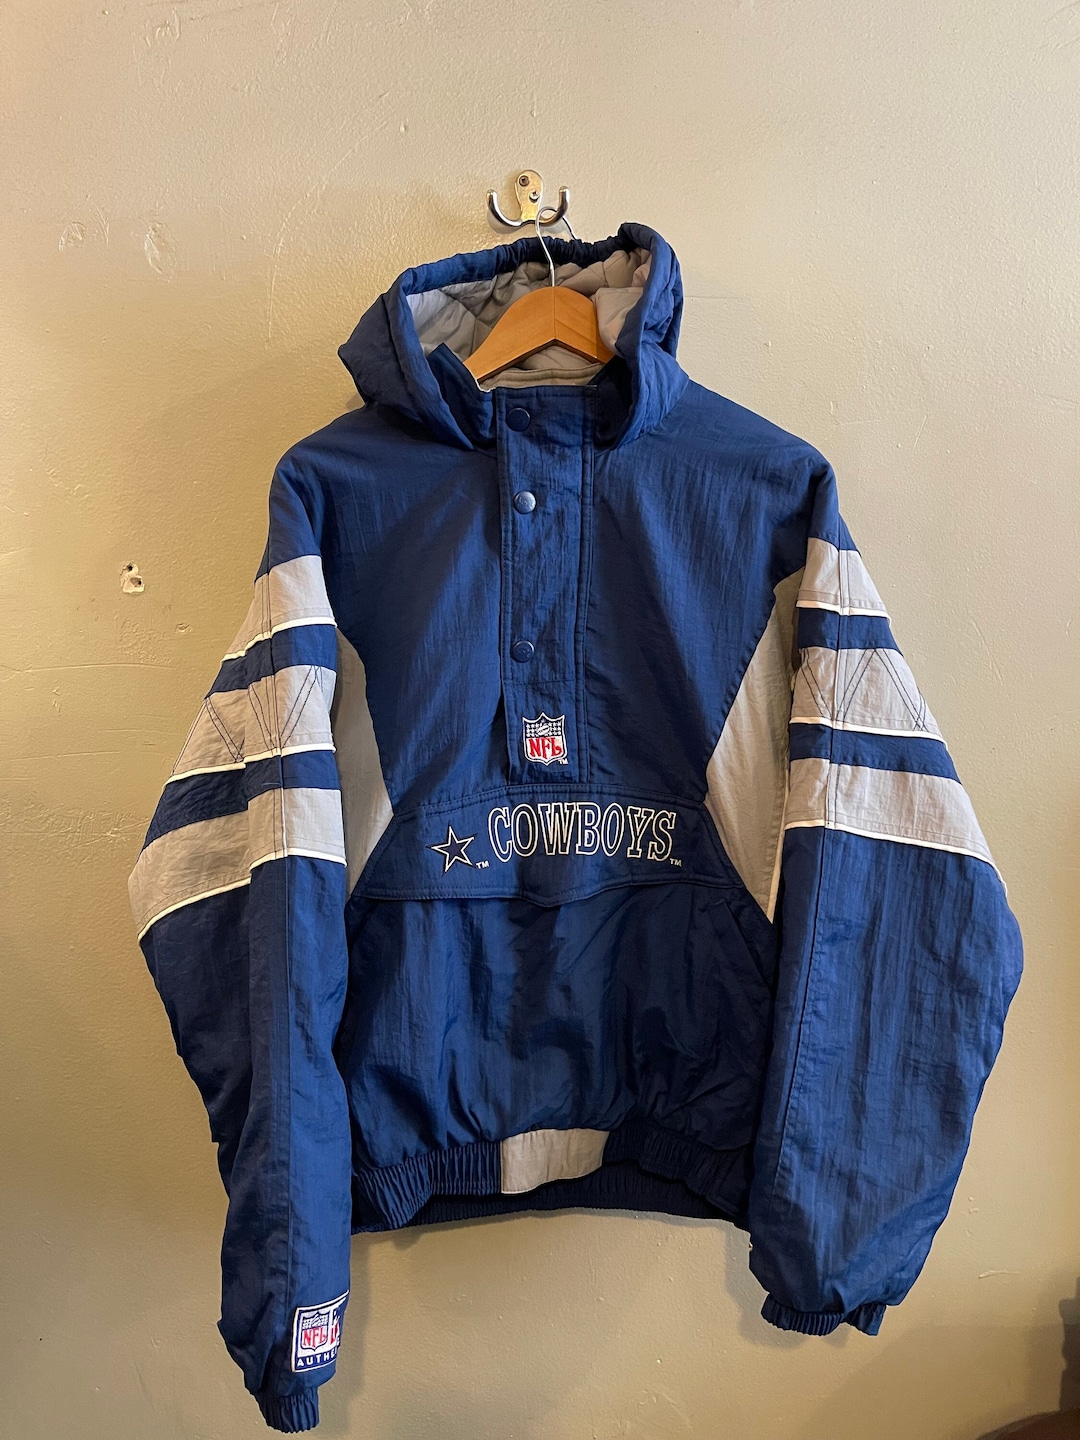 COWBOYS / Dallas Cowboys / Starter Jacket / Vintage NFL / Super Bowl ...